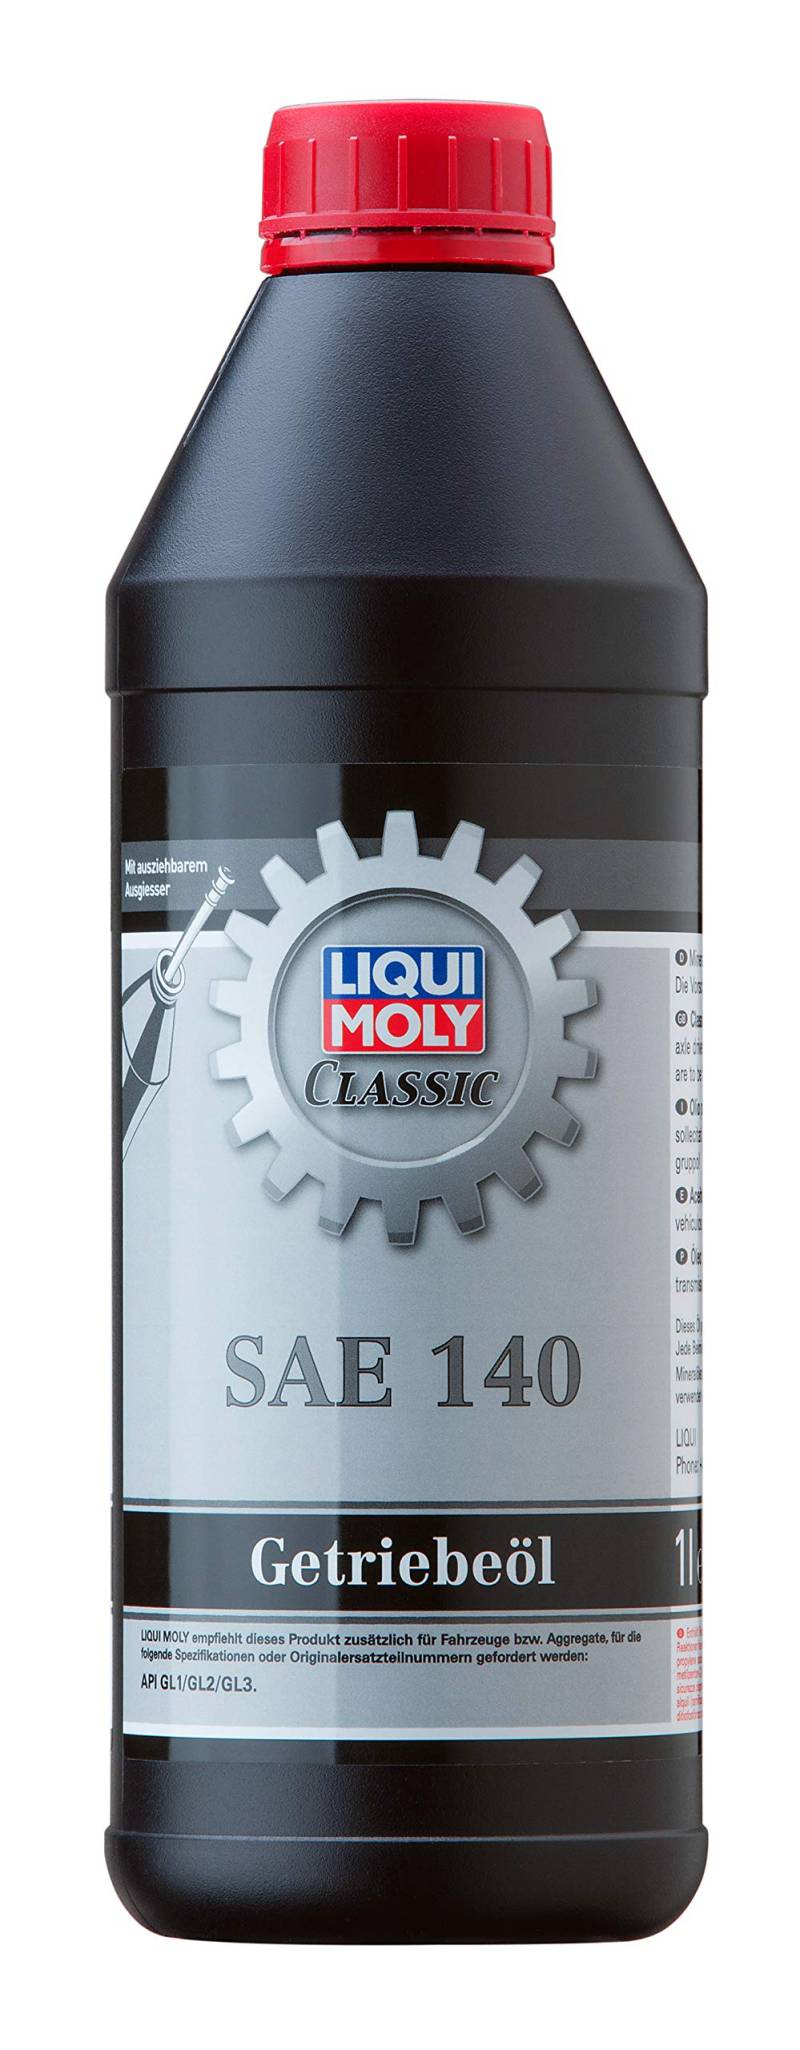 LIQUI MOLY Classic Getriebeöl SAE 140 | 1 L | Getriebeöl | Hydrauliköl | Art.-Nr.: 20817 von Liqui Moly